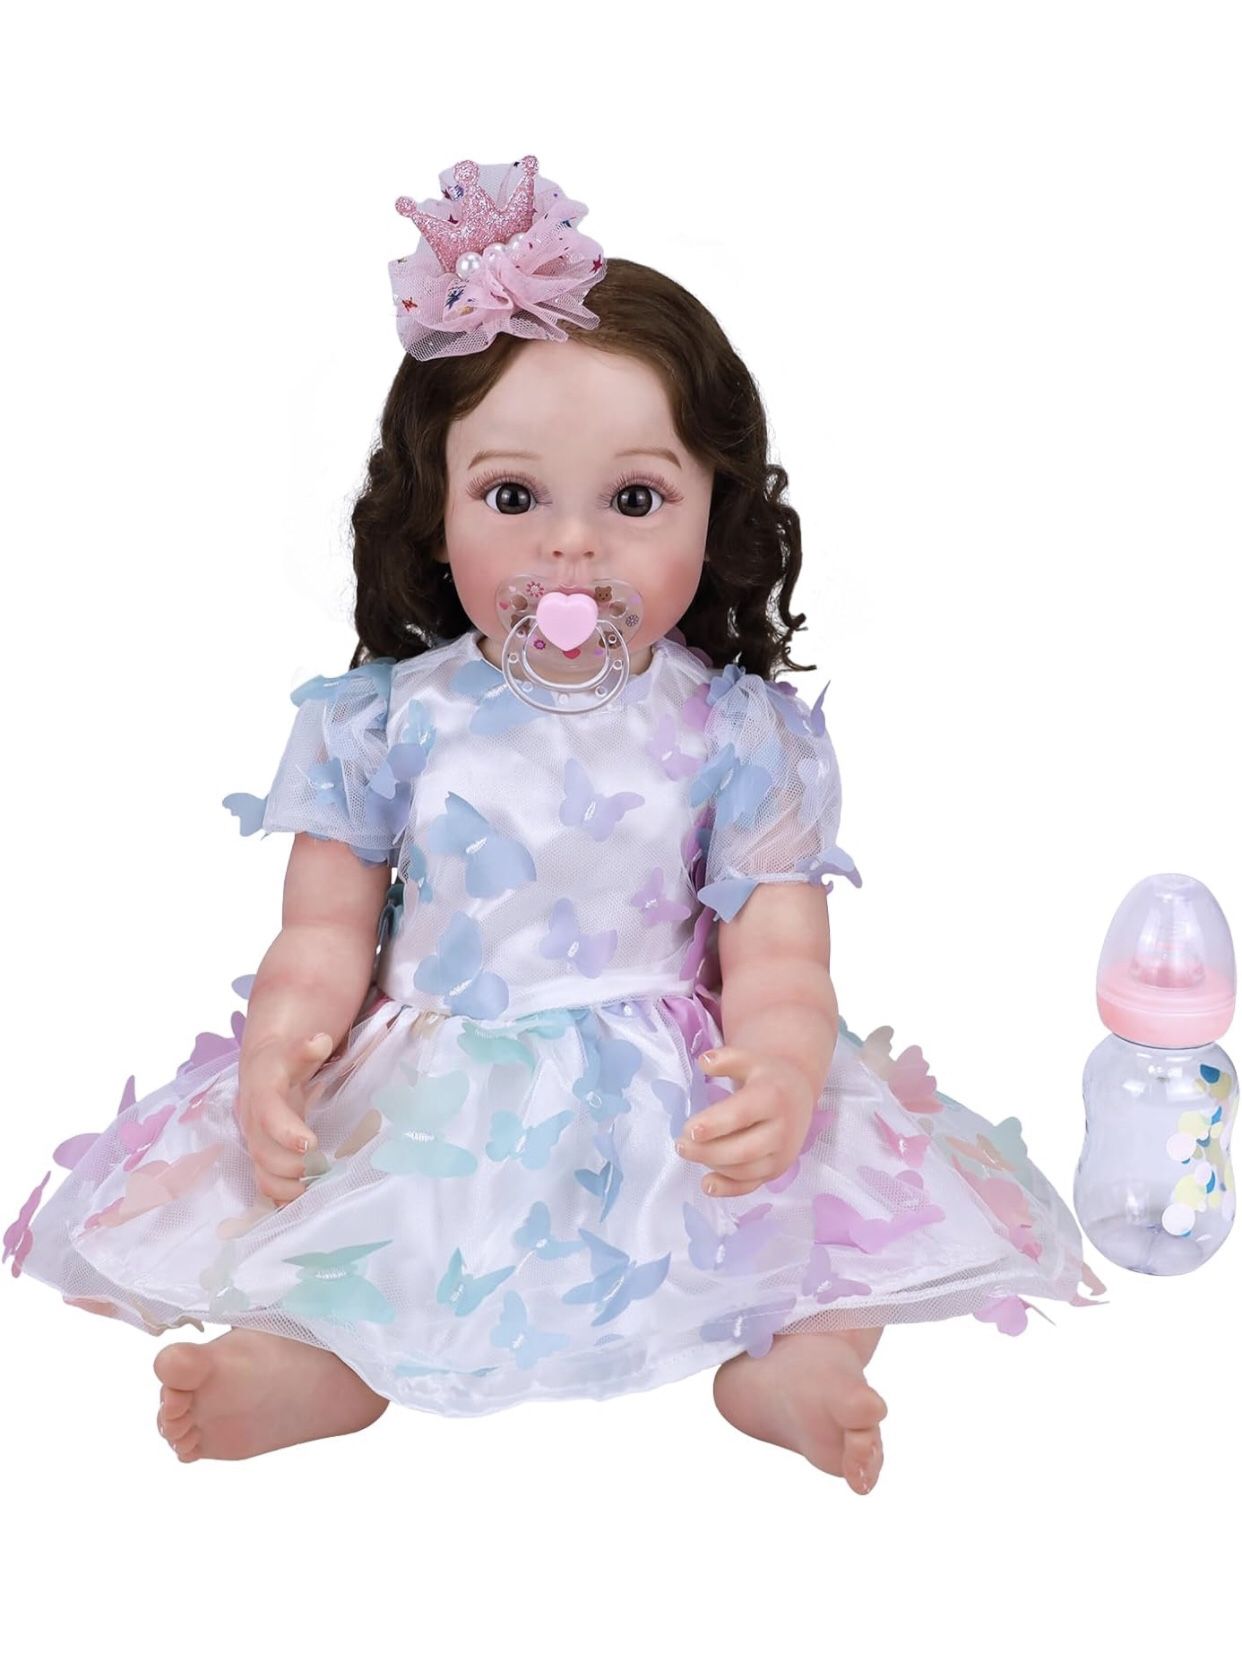 Reborn Baby Dolls, 22” Realistic Newborn Baby Doll with Soft Full Body Vinyl Silicone 